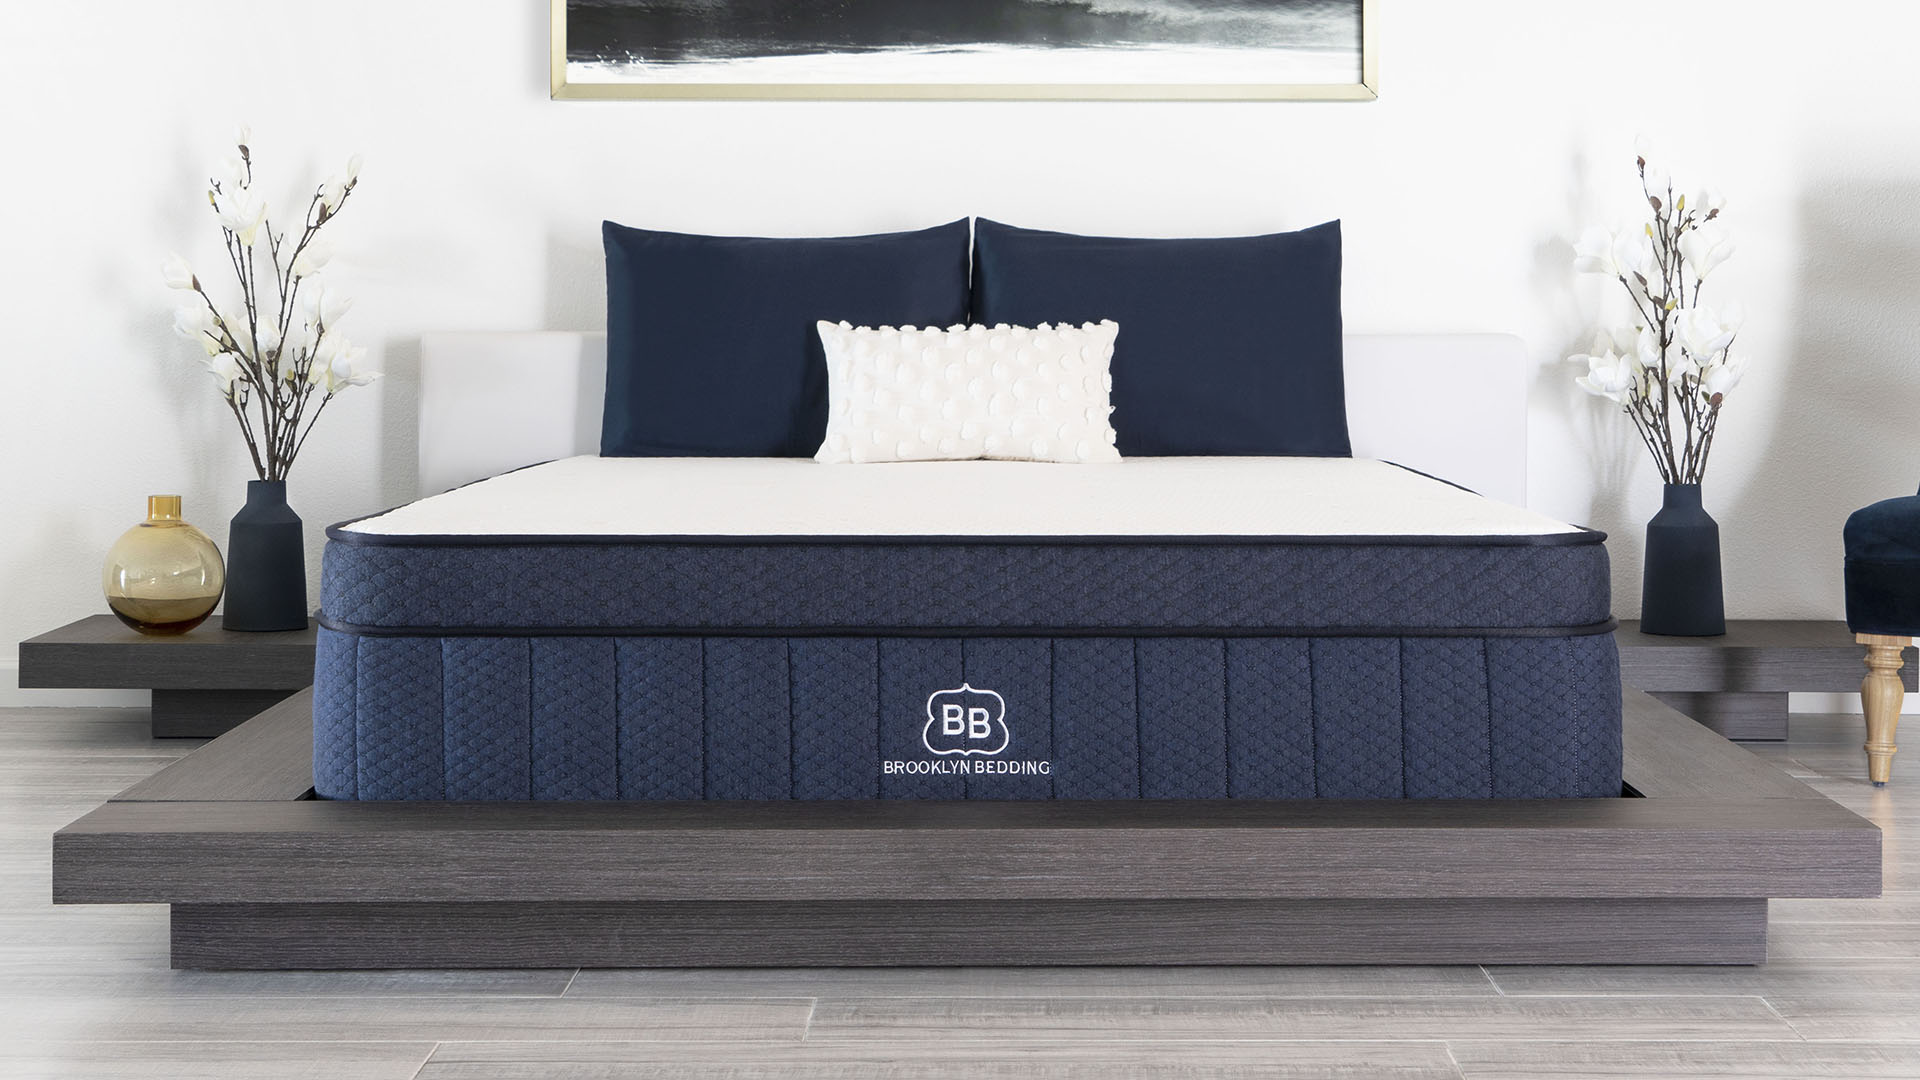 Brooklyn Bedding Aurora Hybrid Mattress in a Smart Bedroom